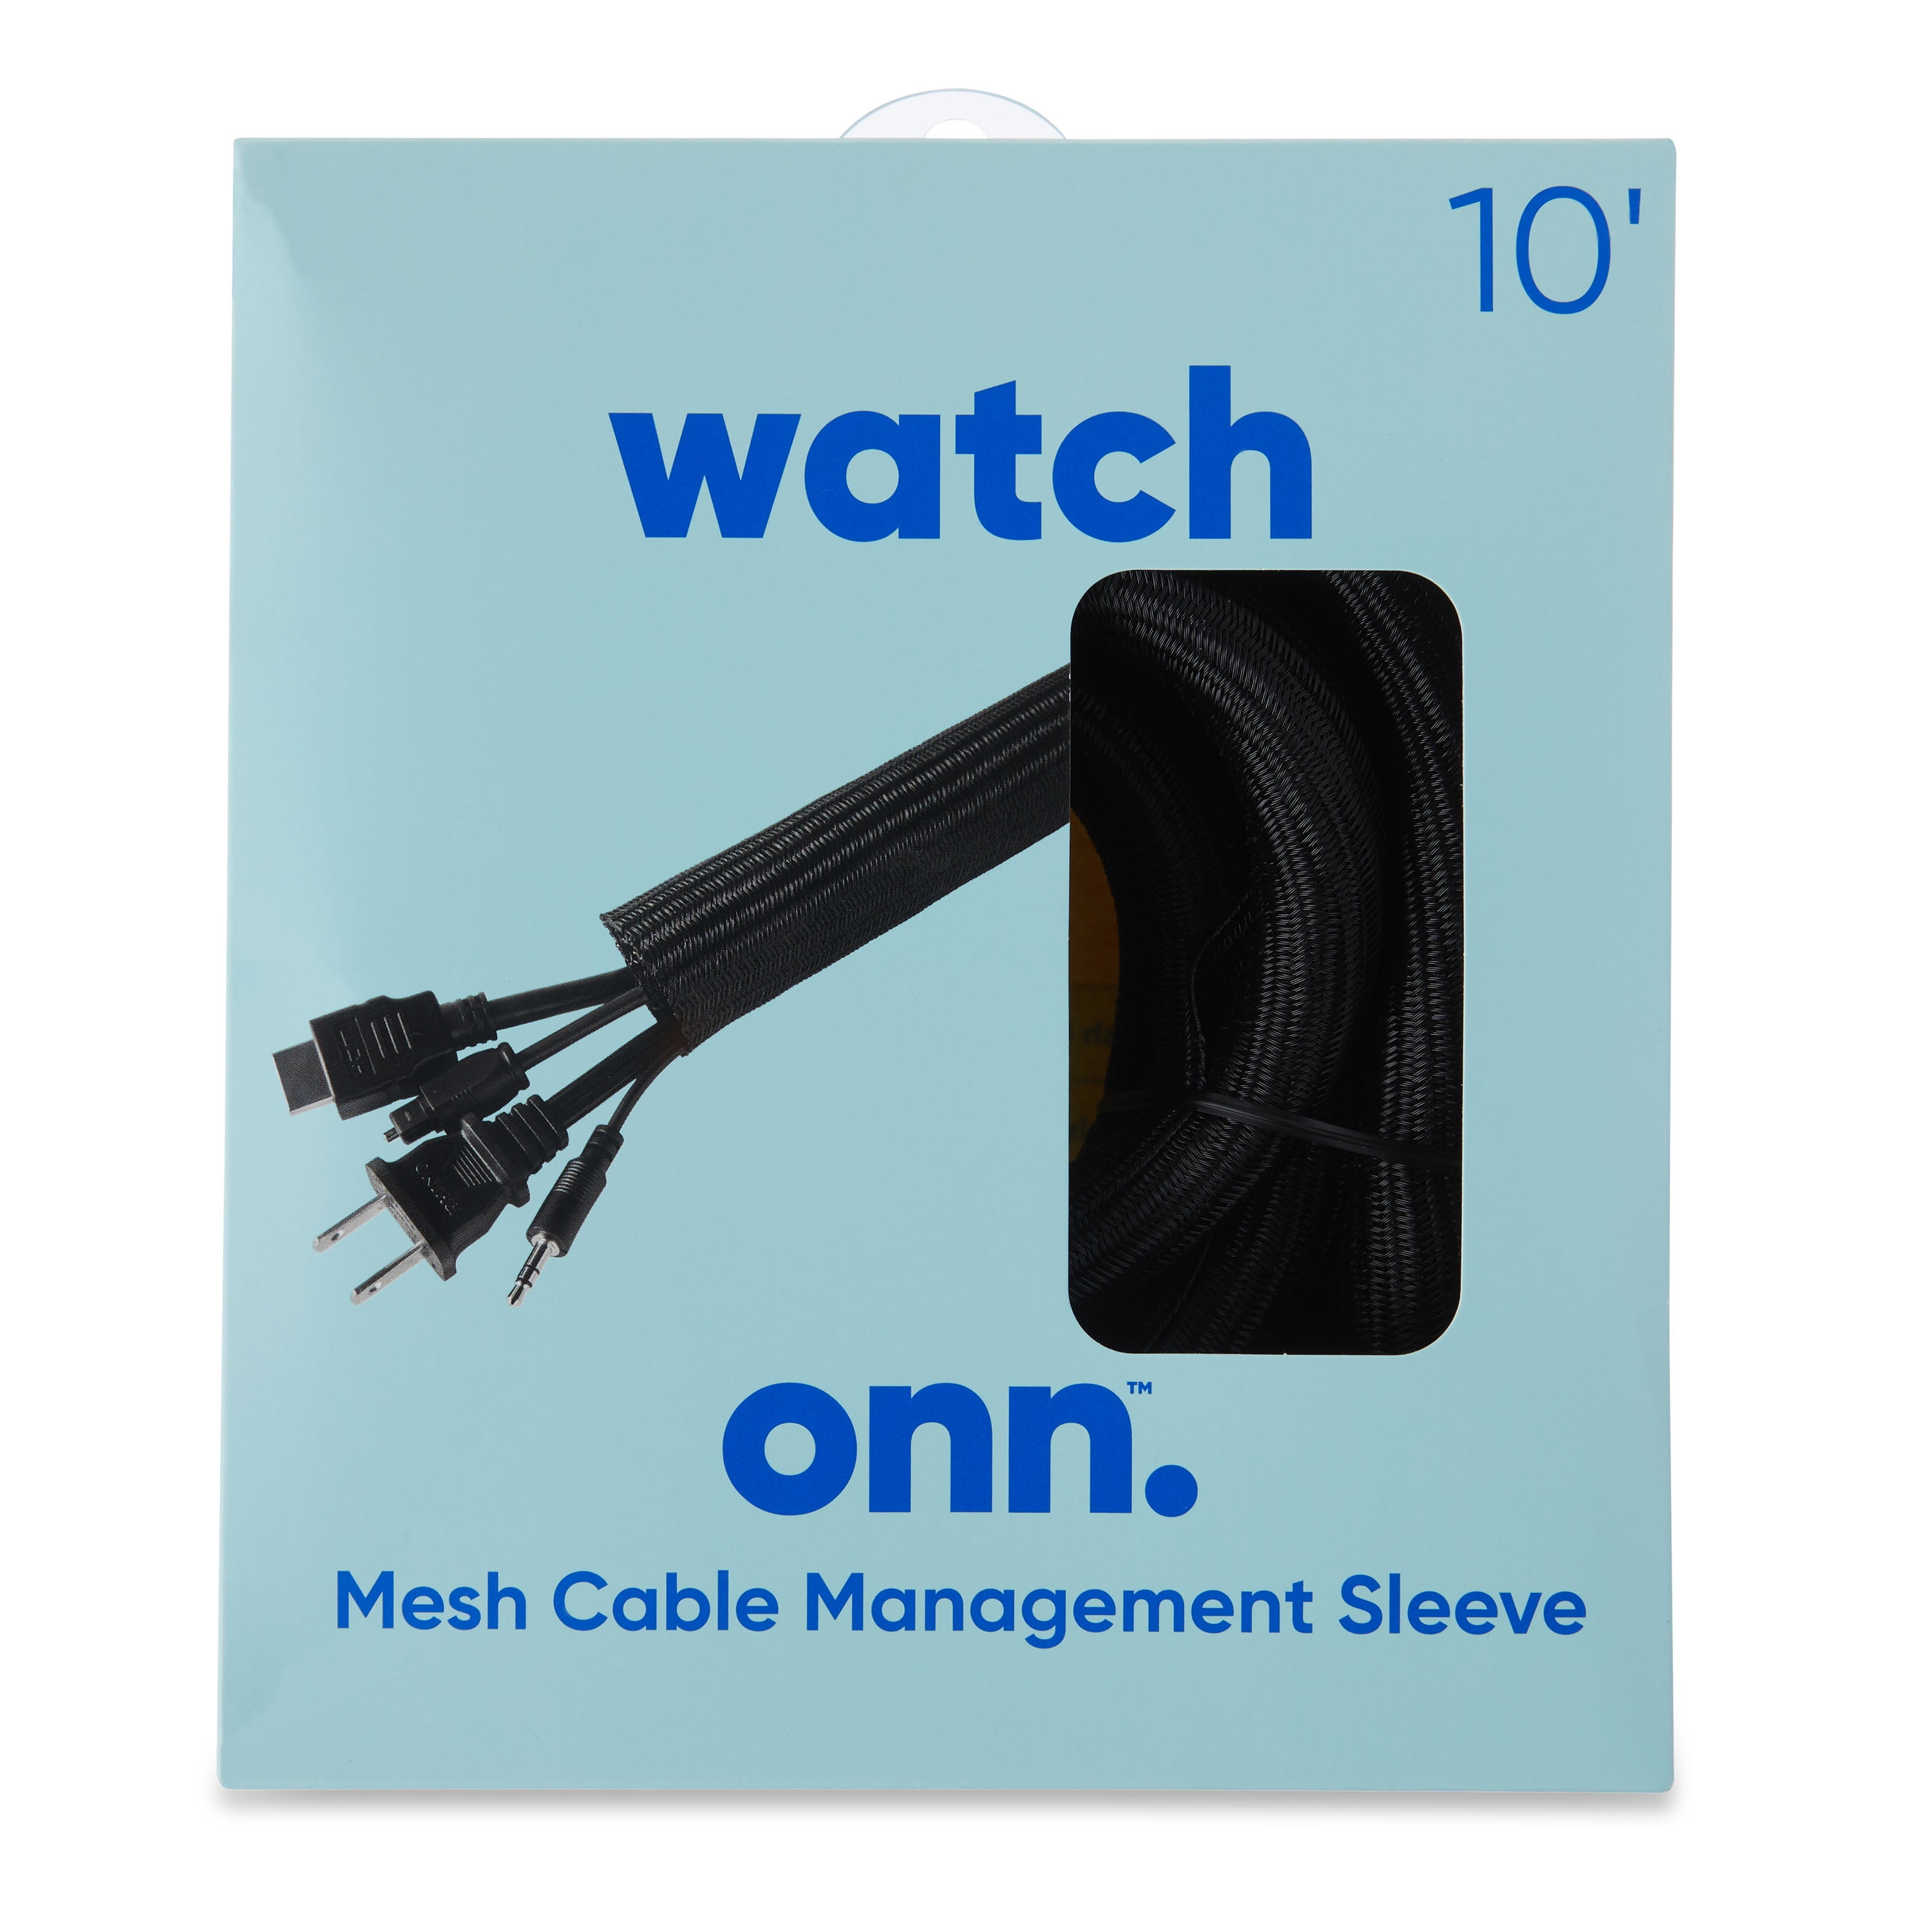 onn. 10' Mesh Cable Management Sleeve, Black